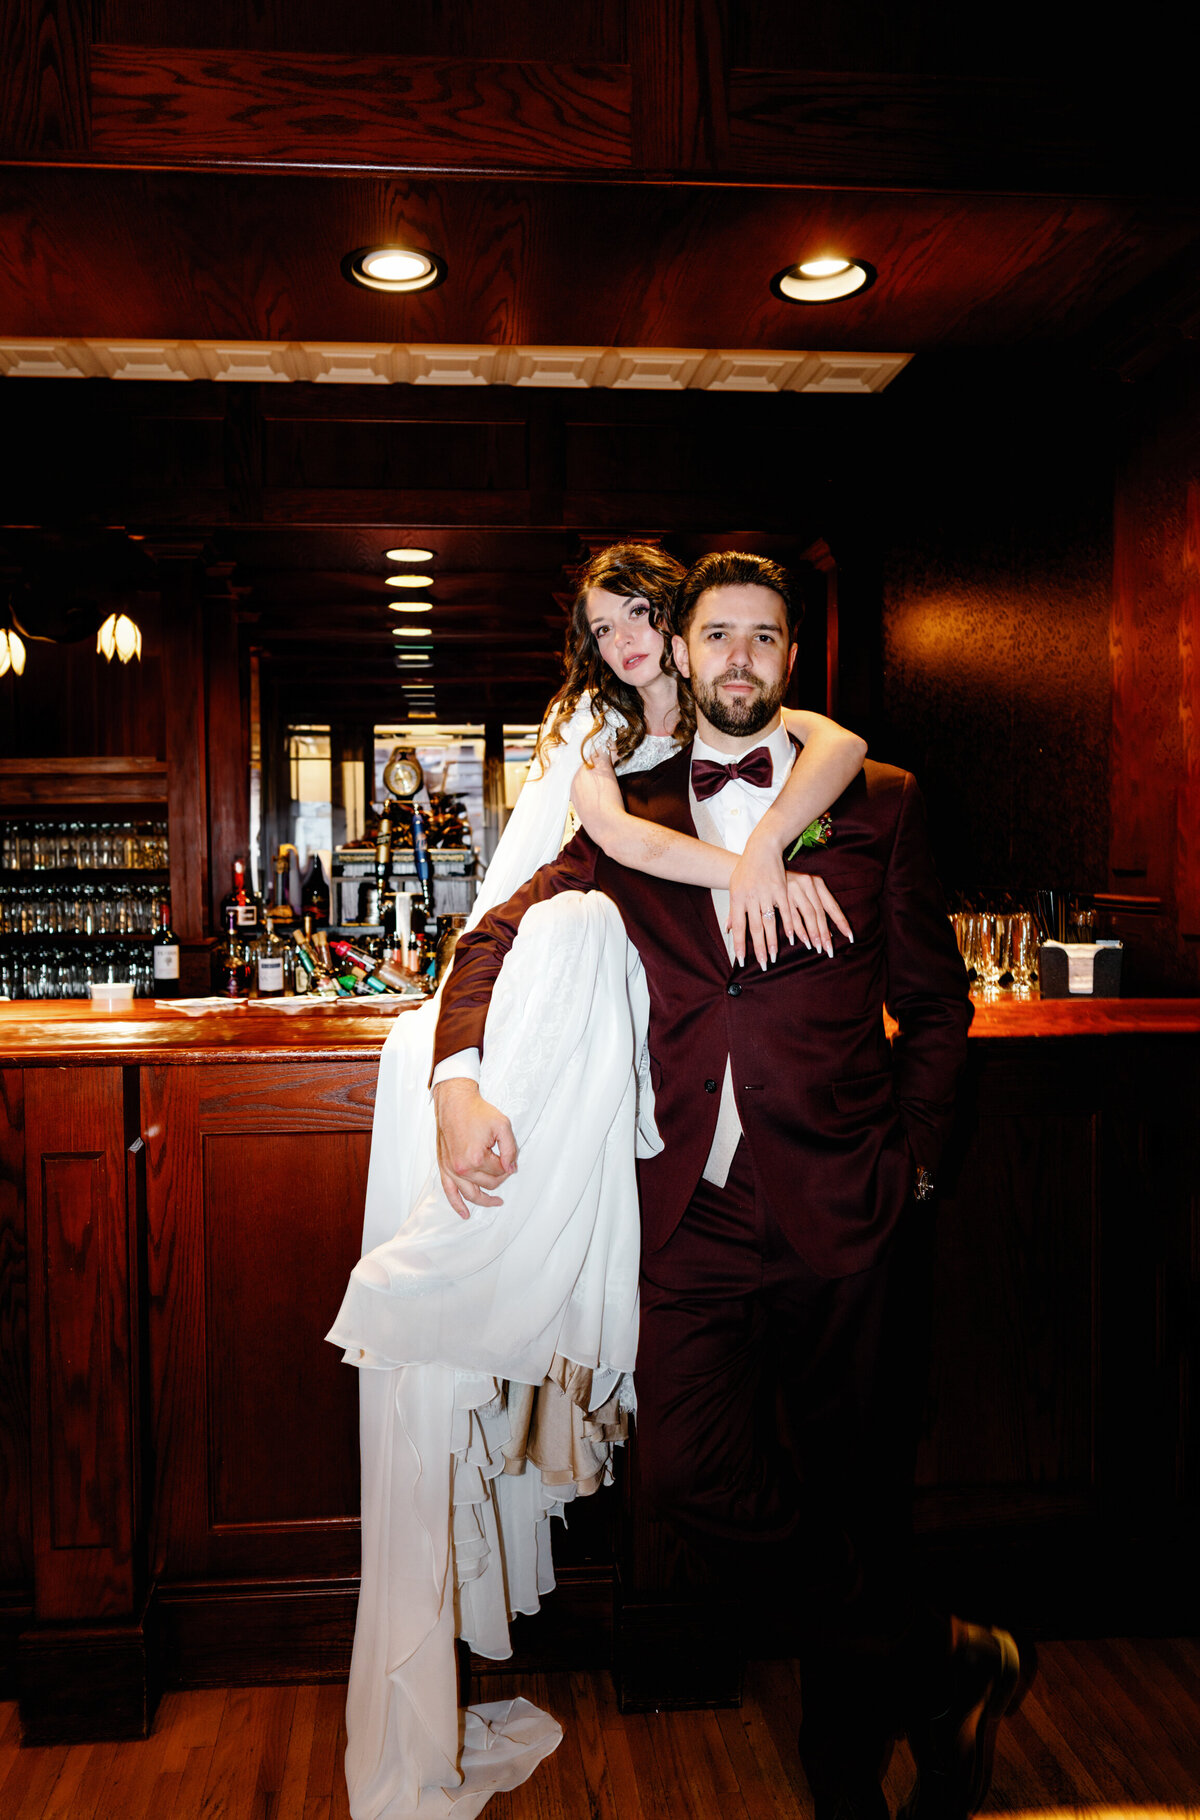 Aspen-Avenue-Chicago-Wedding-Photographer-Haley-Mansion-Fall-Editorial-Bar-Cape-Dress